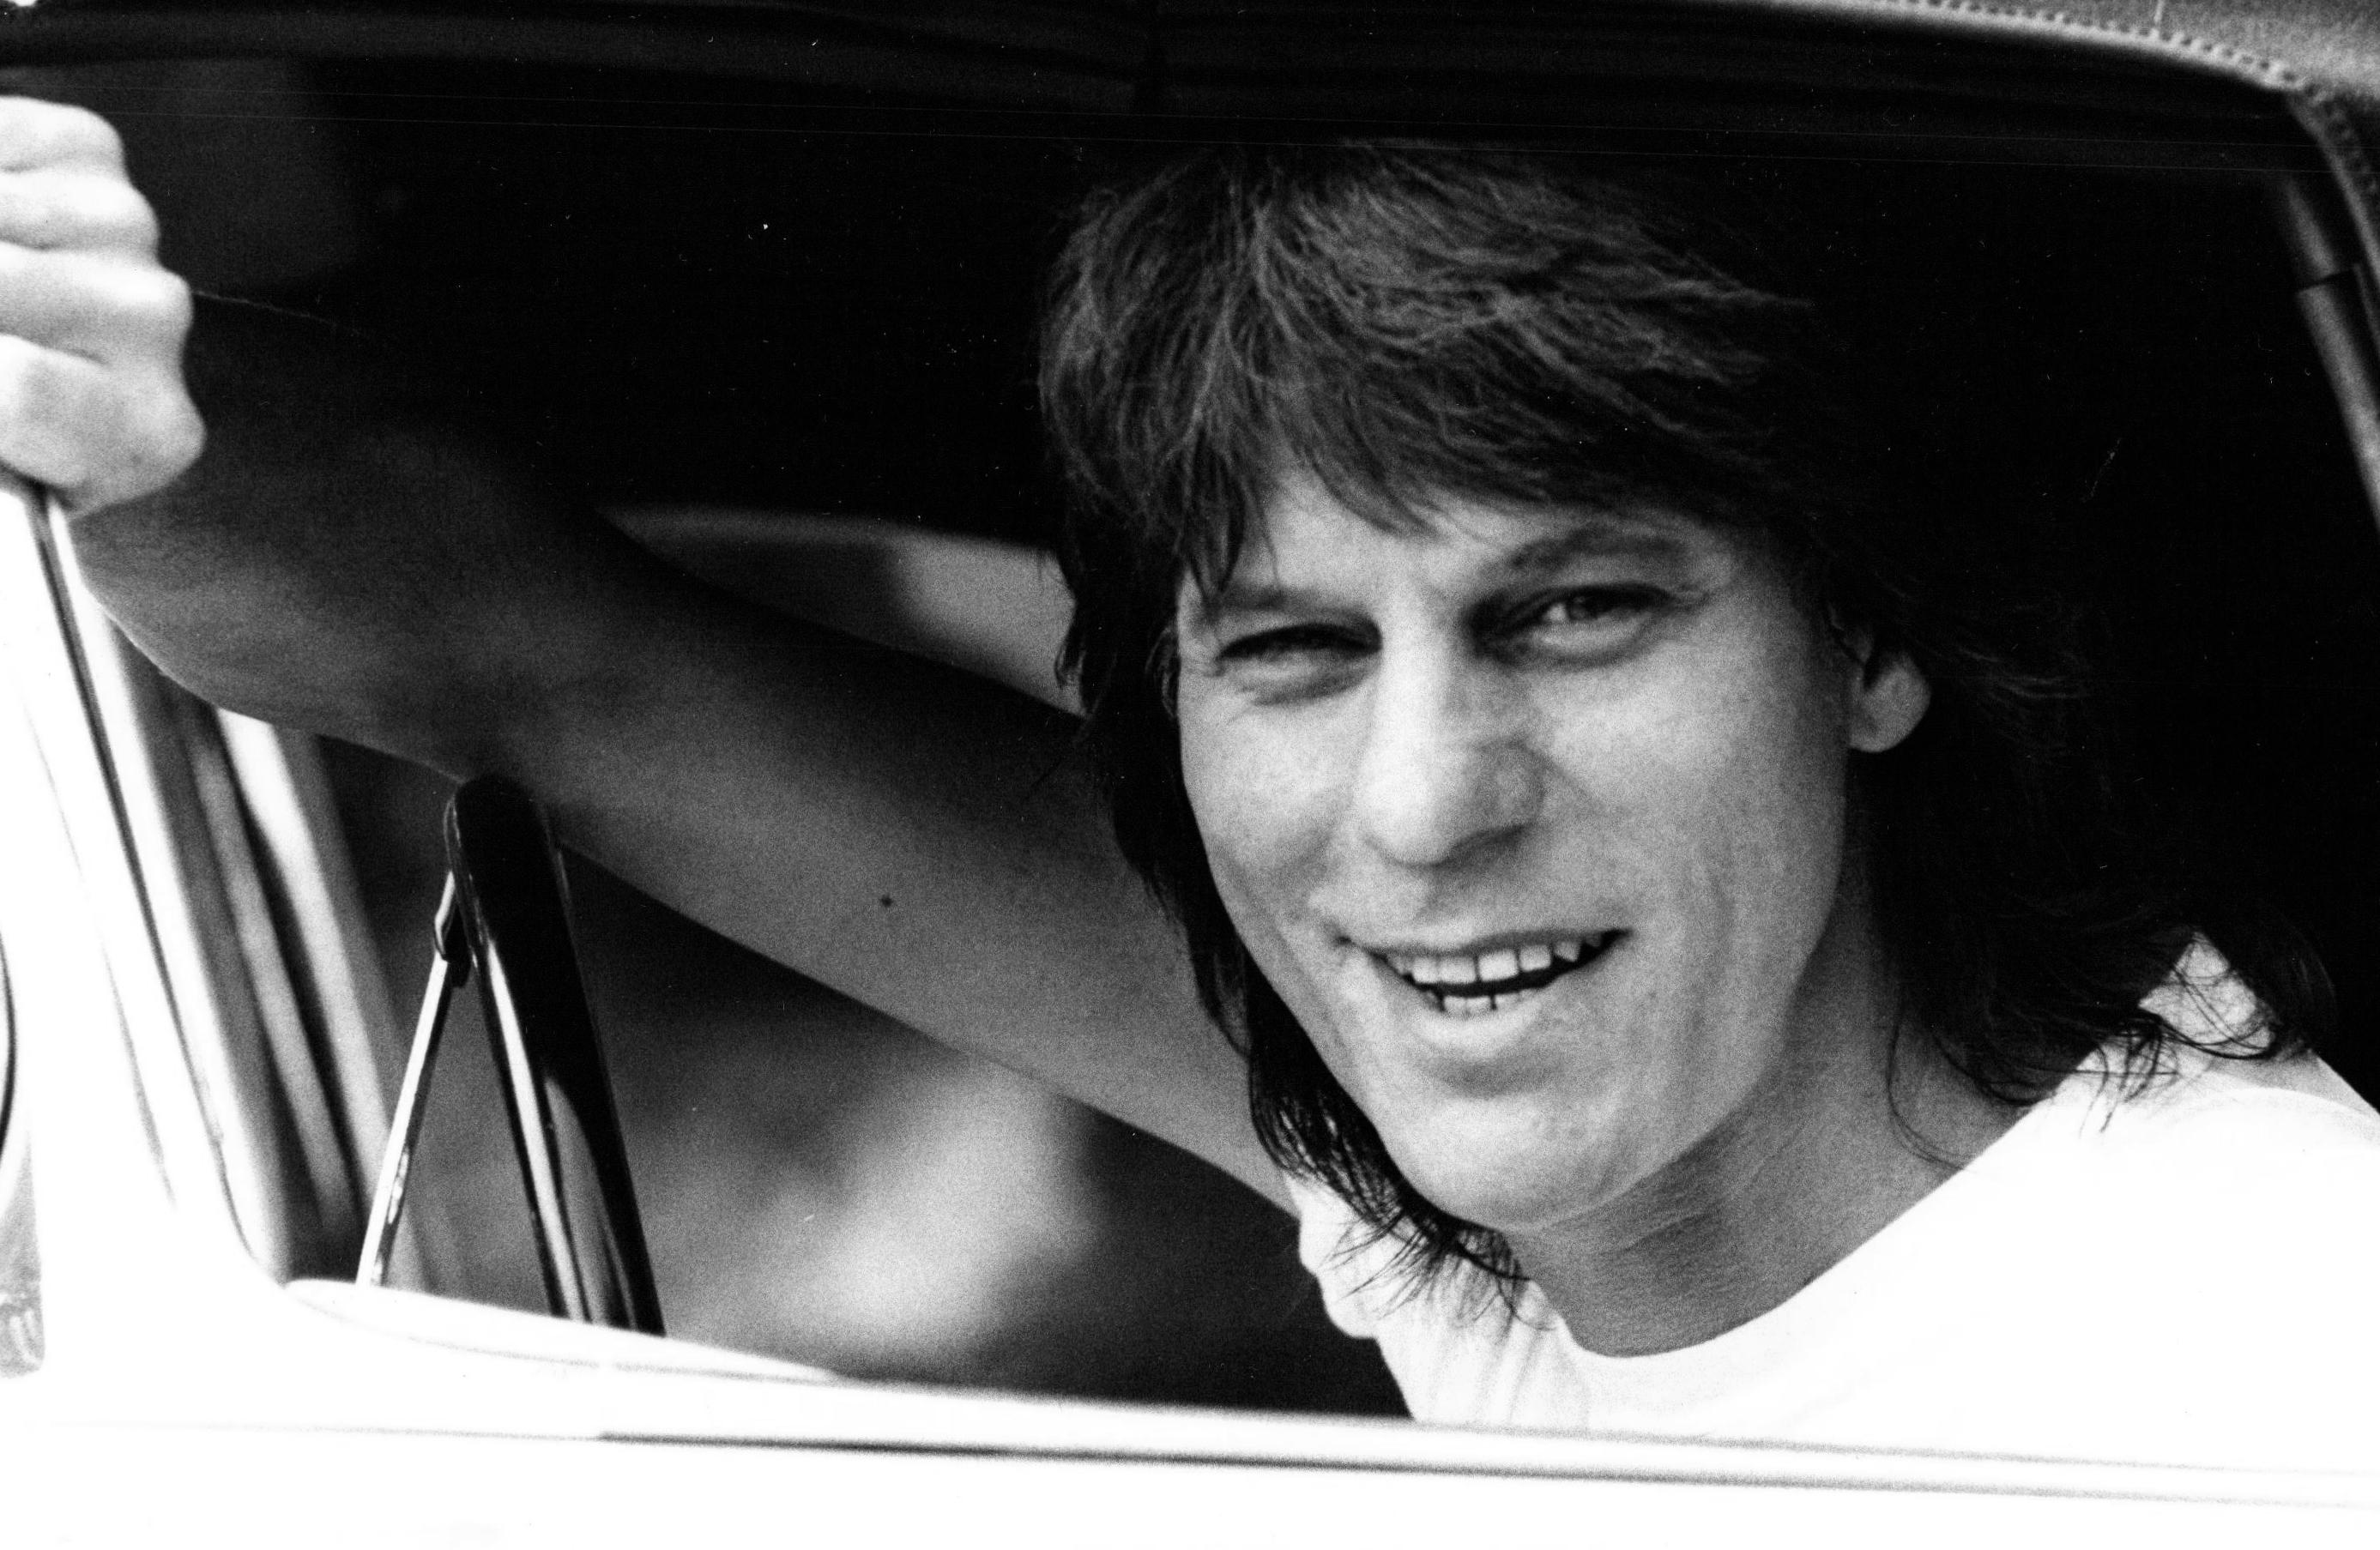 Michael Putland Portrait Photograph - Jeff Beck Smiling in Car Window Vintage Original Photograph